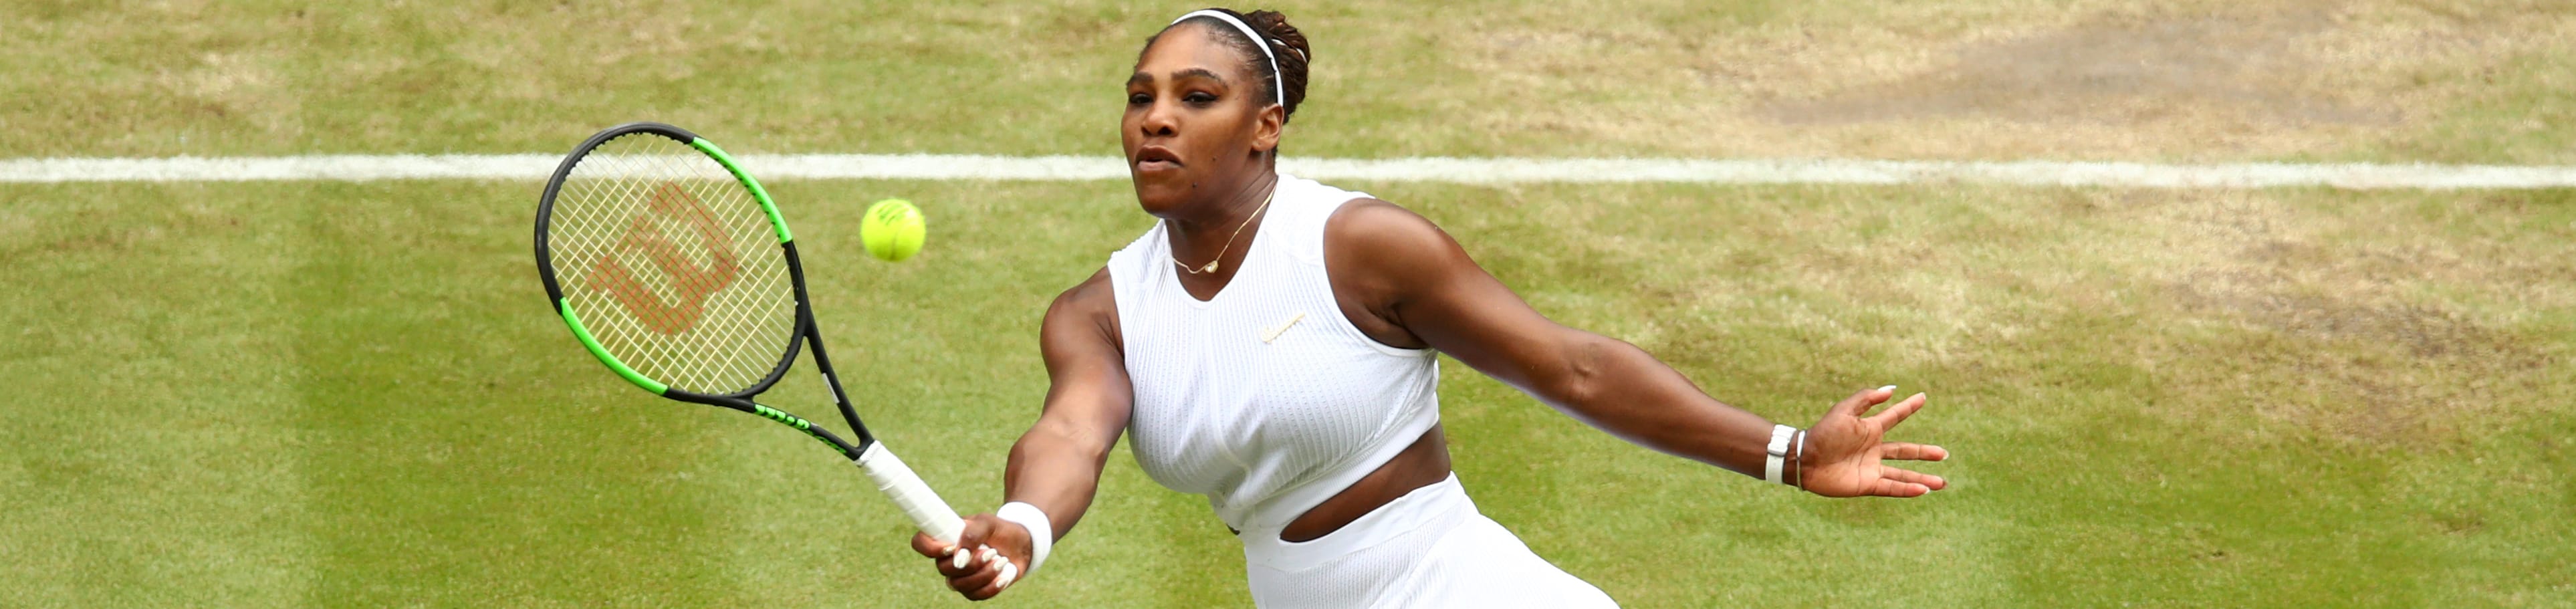 Pronostici Wimbledon 2019, day 10: semifinali femminili, ecco l'analisi